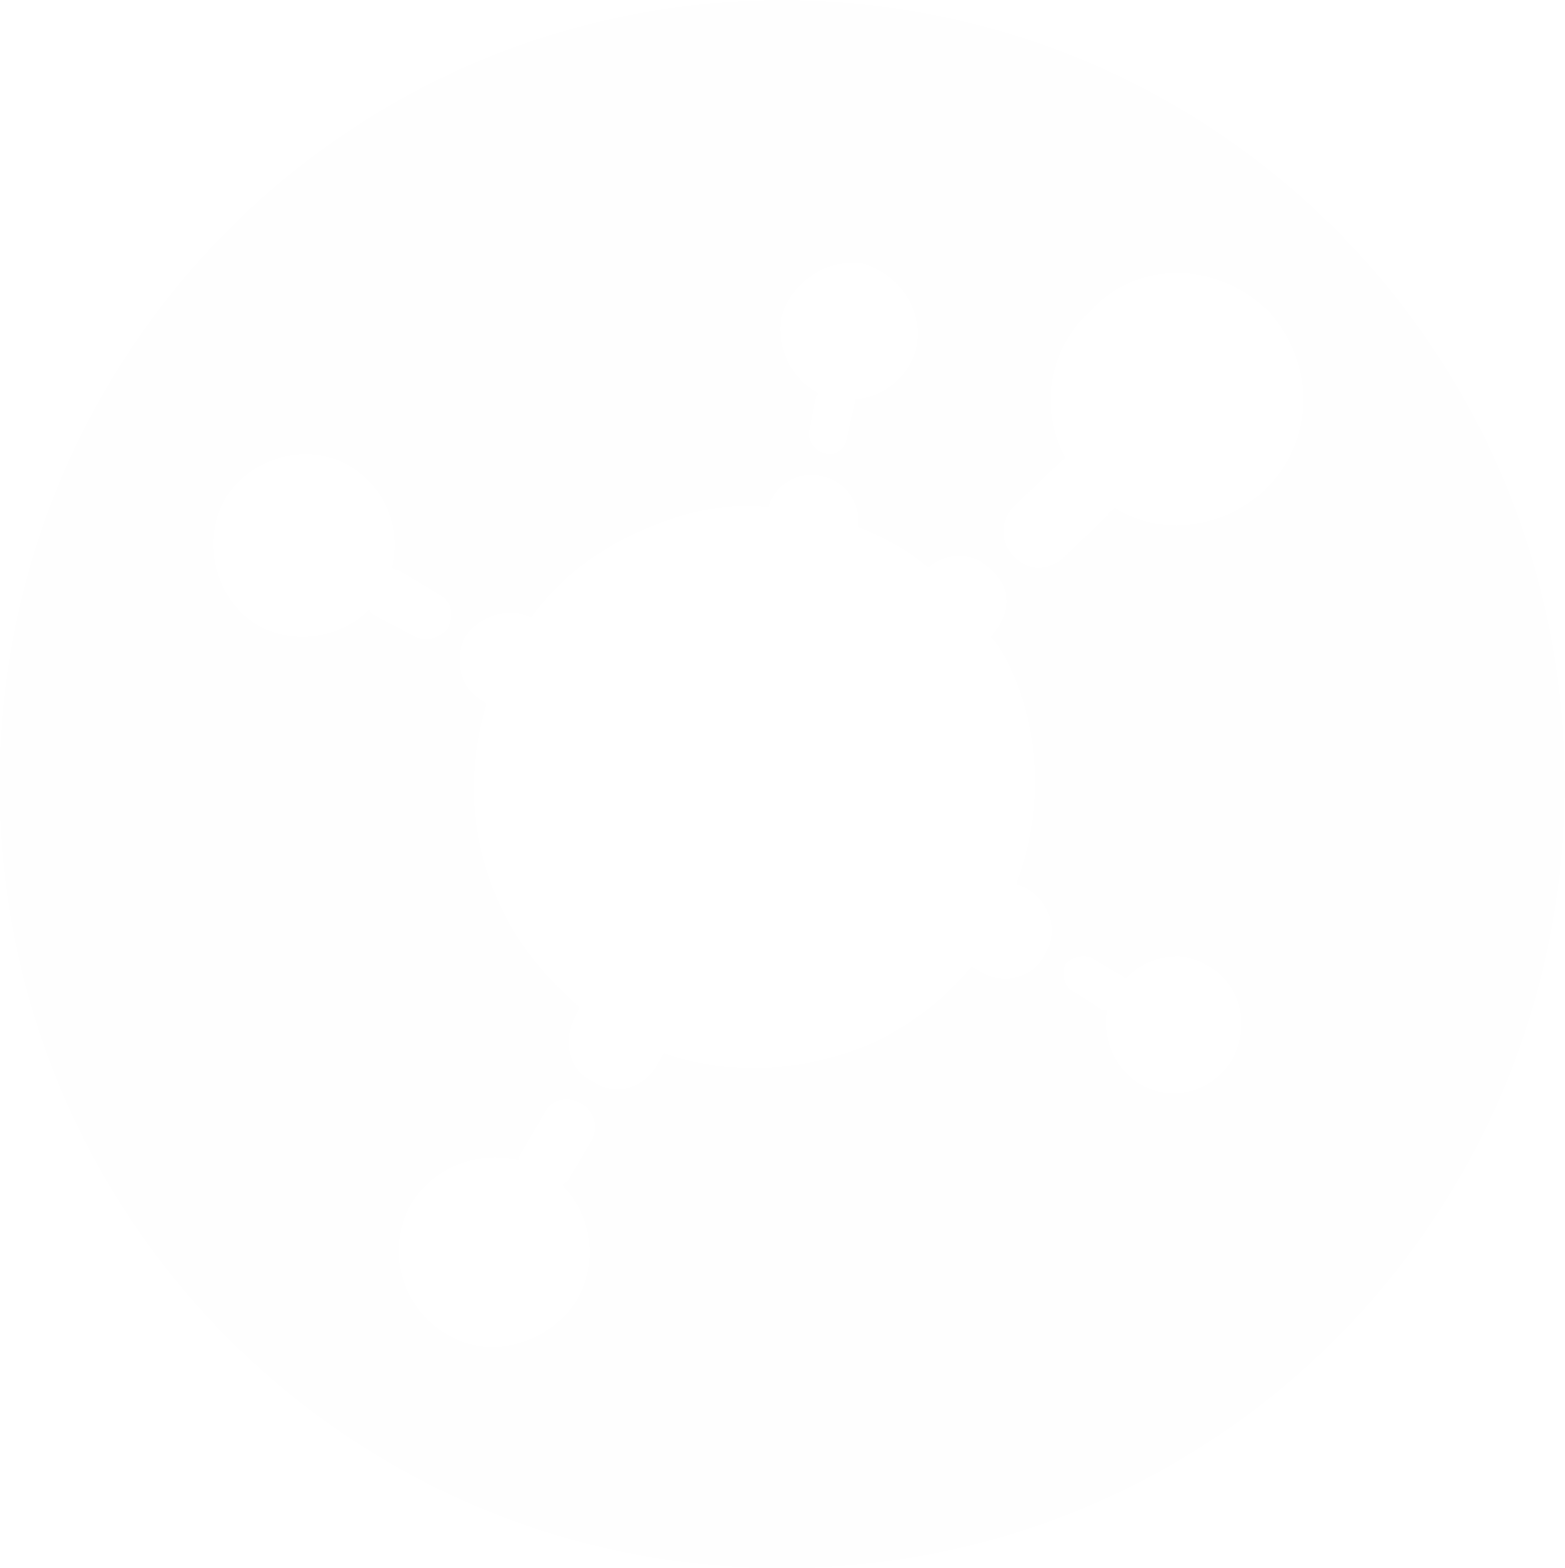 Immutep logo for dark backgrounds (transparent PNG)